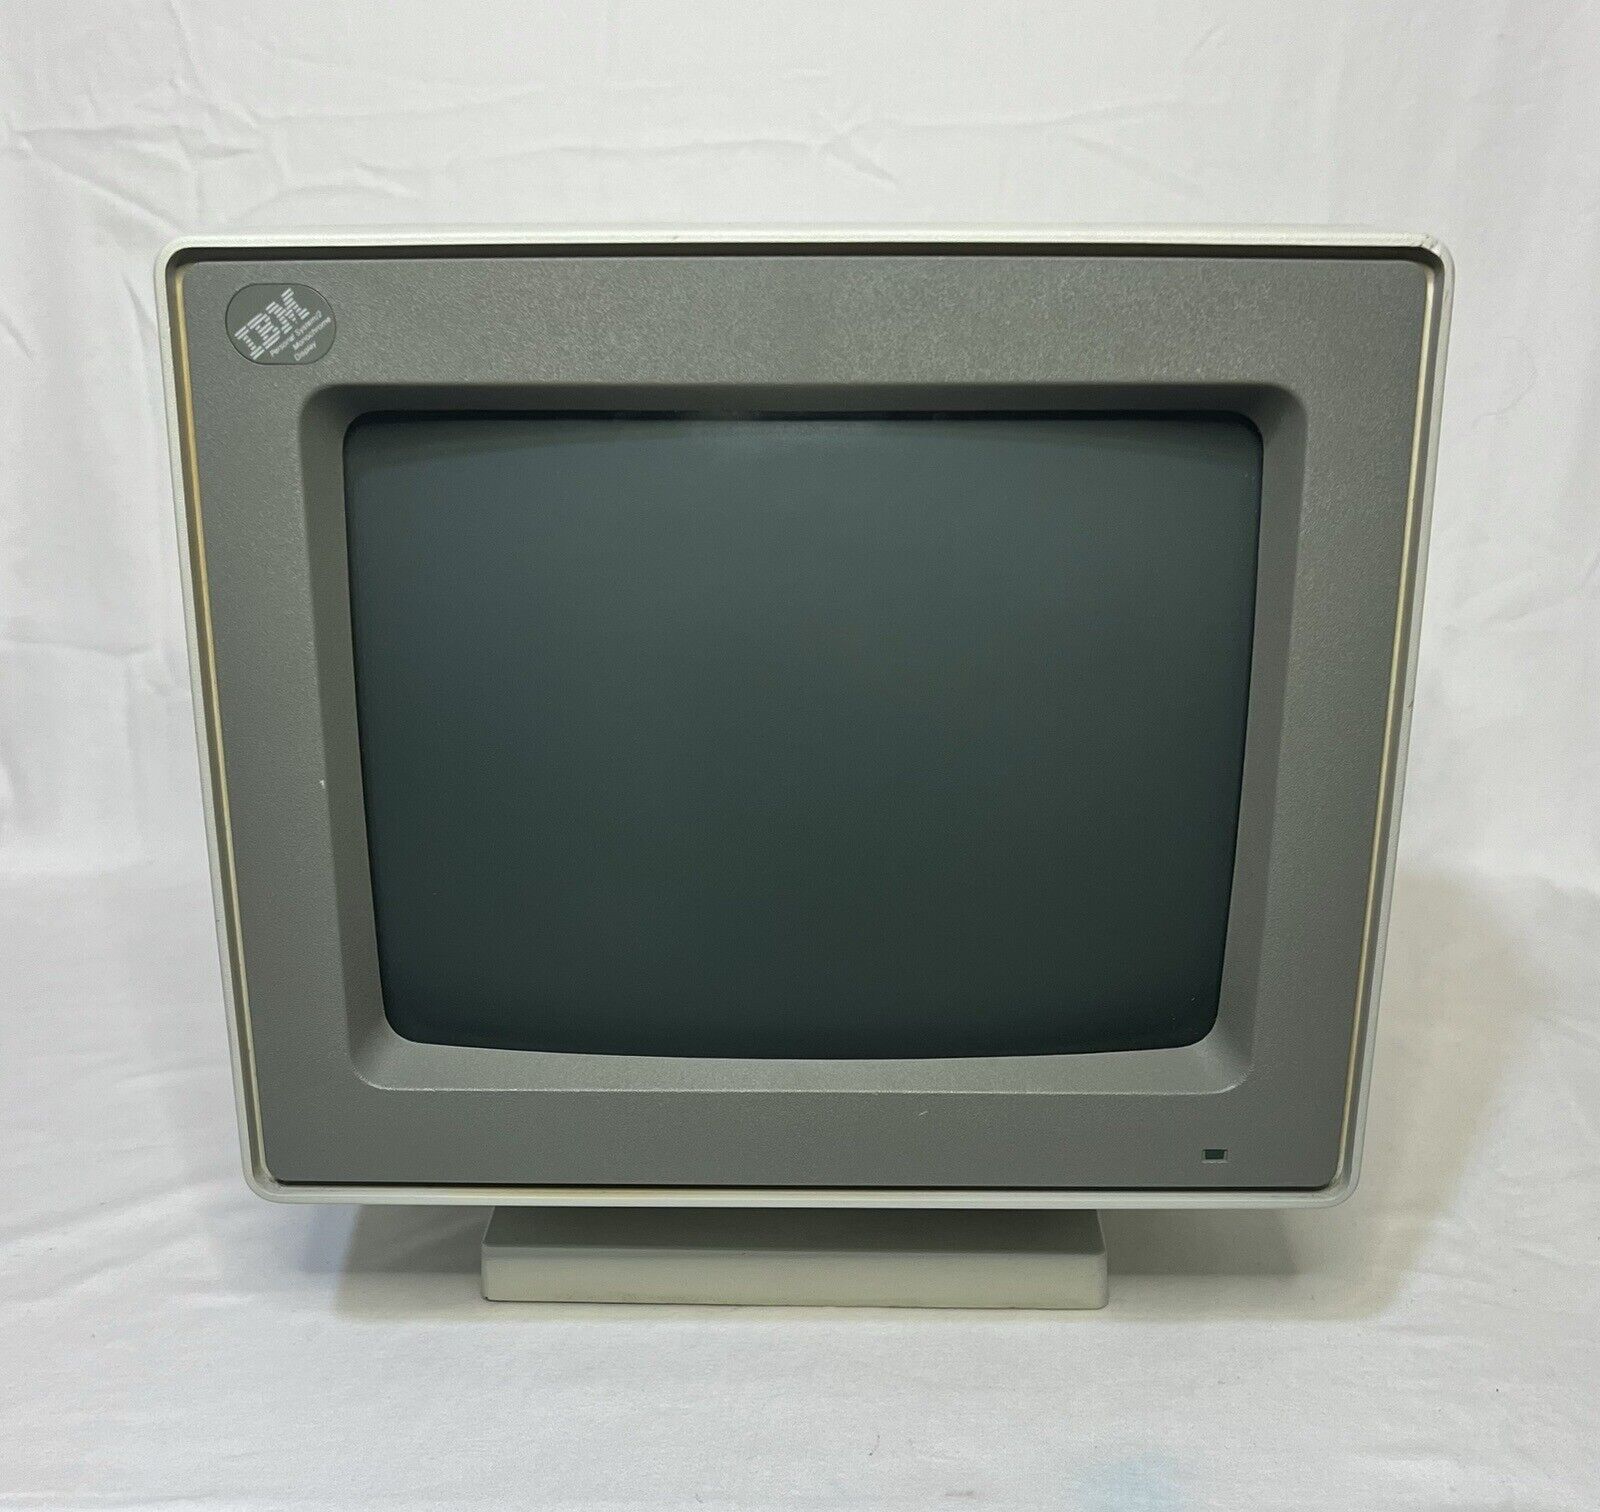 Vintage IBM 8503001 Personal System/2 Monochrome Display